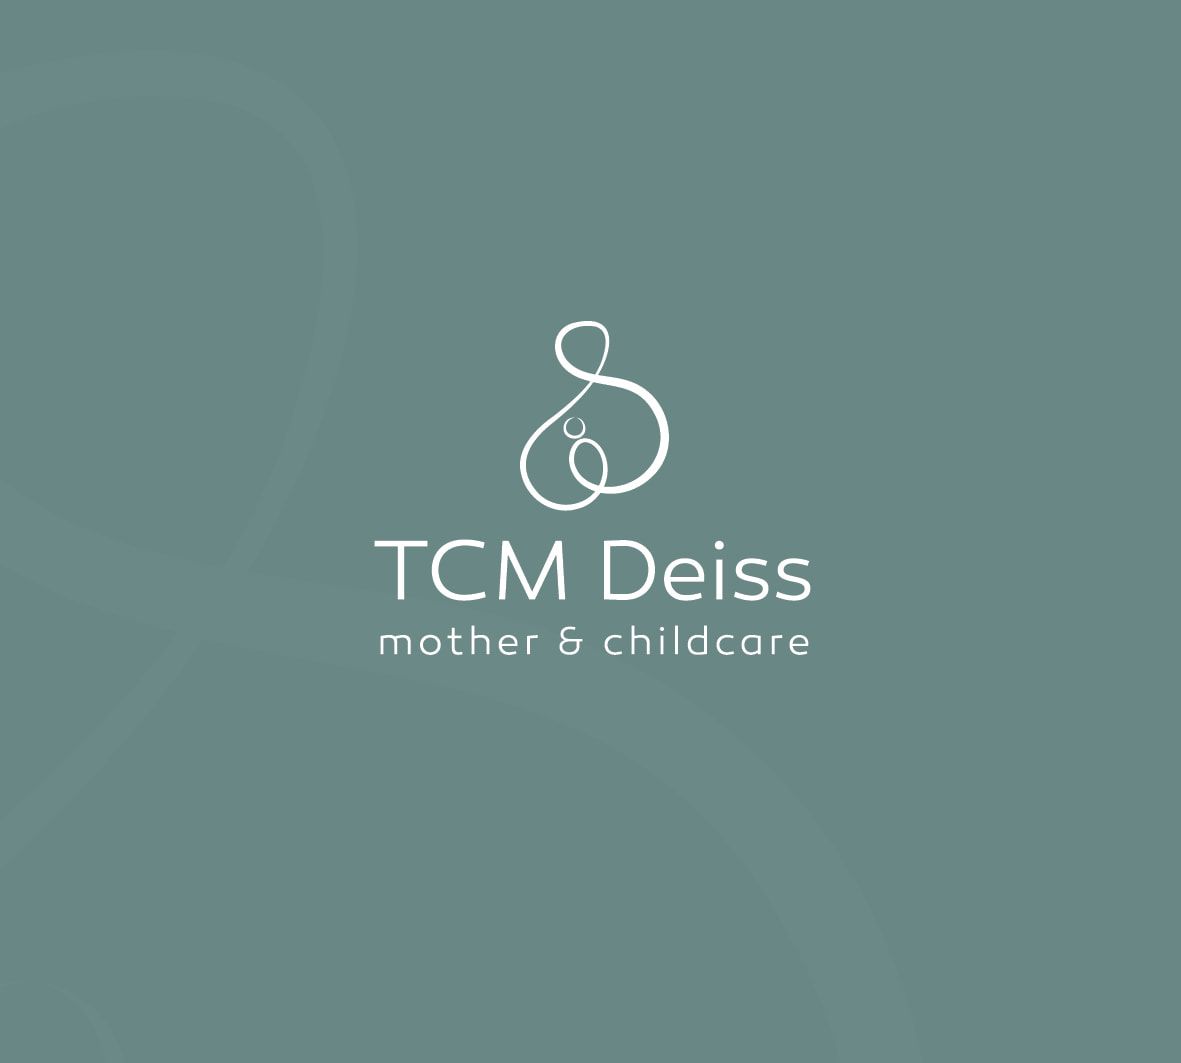 TCM Deiss – mother & childcare